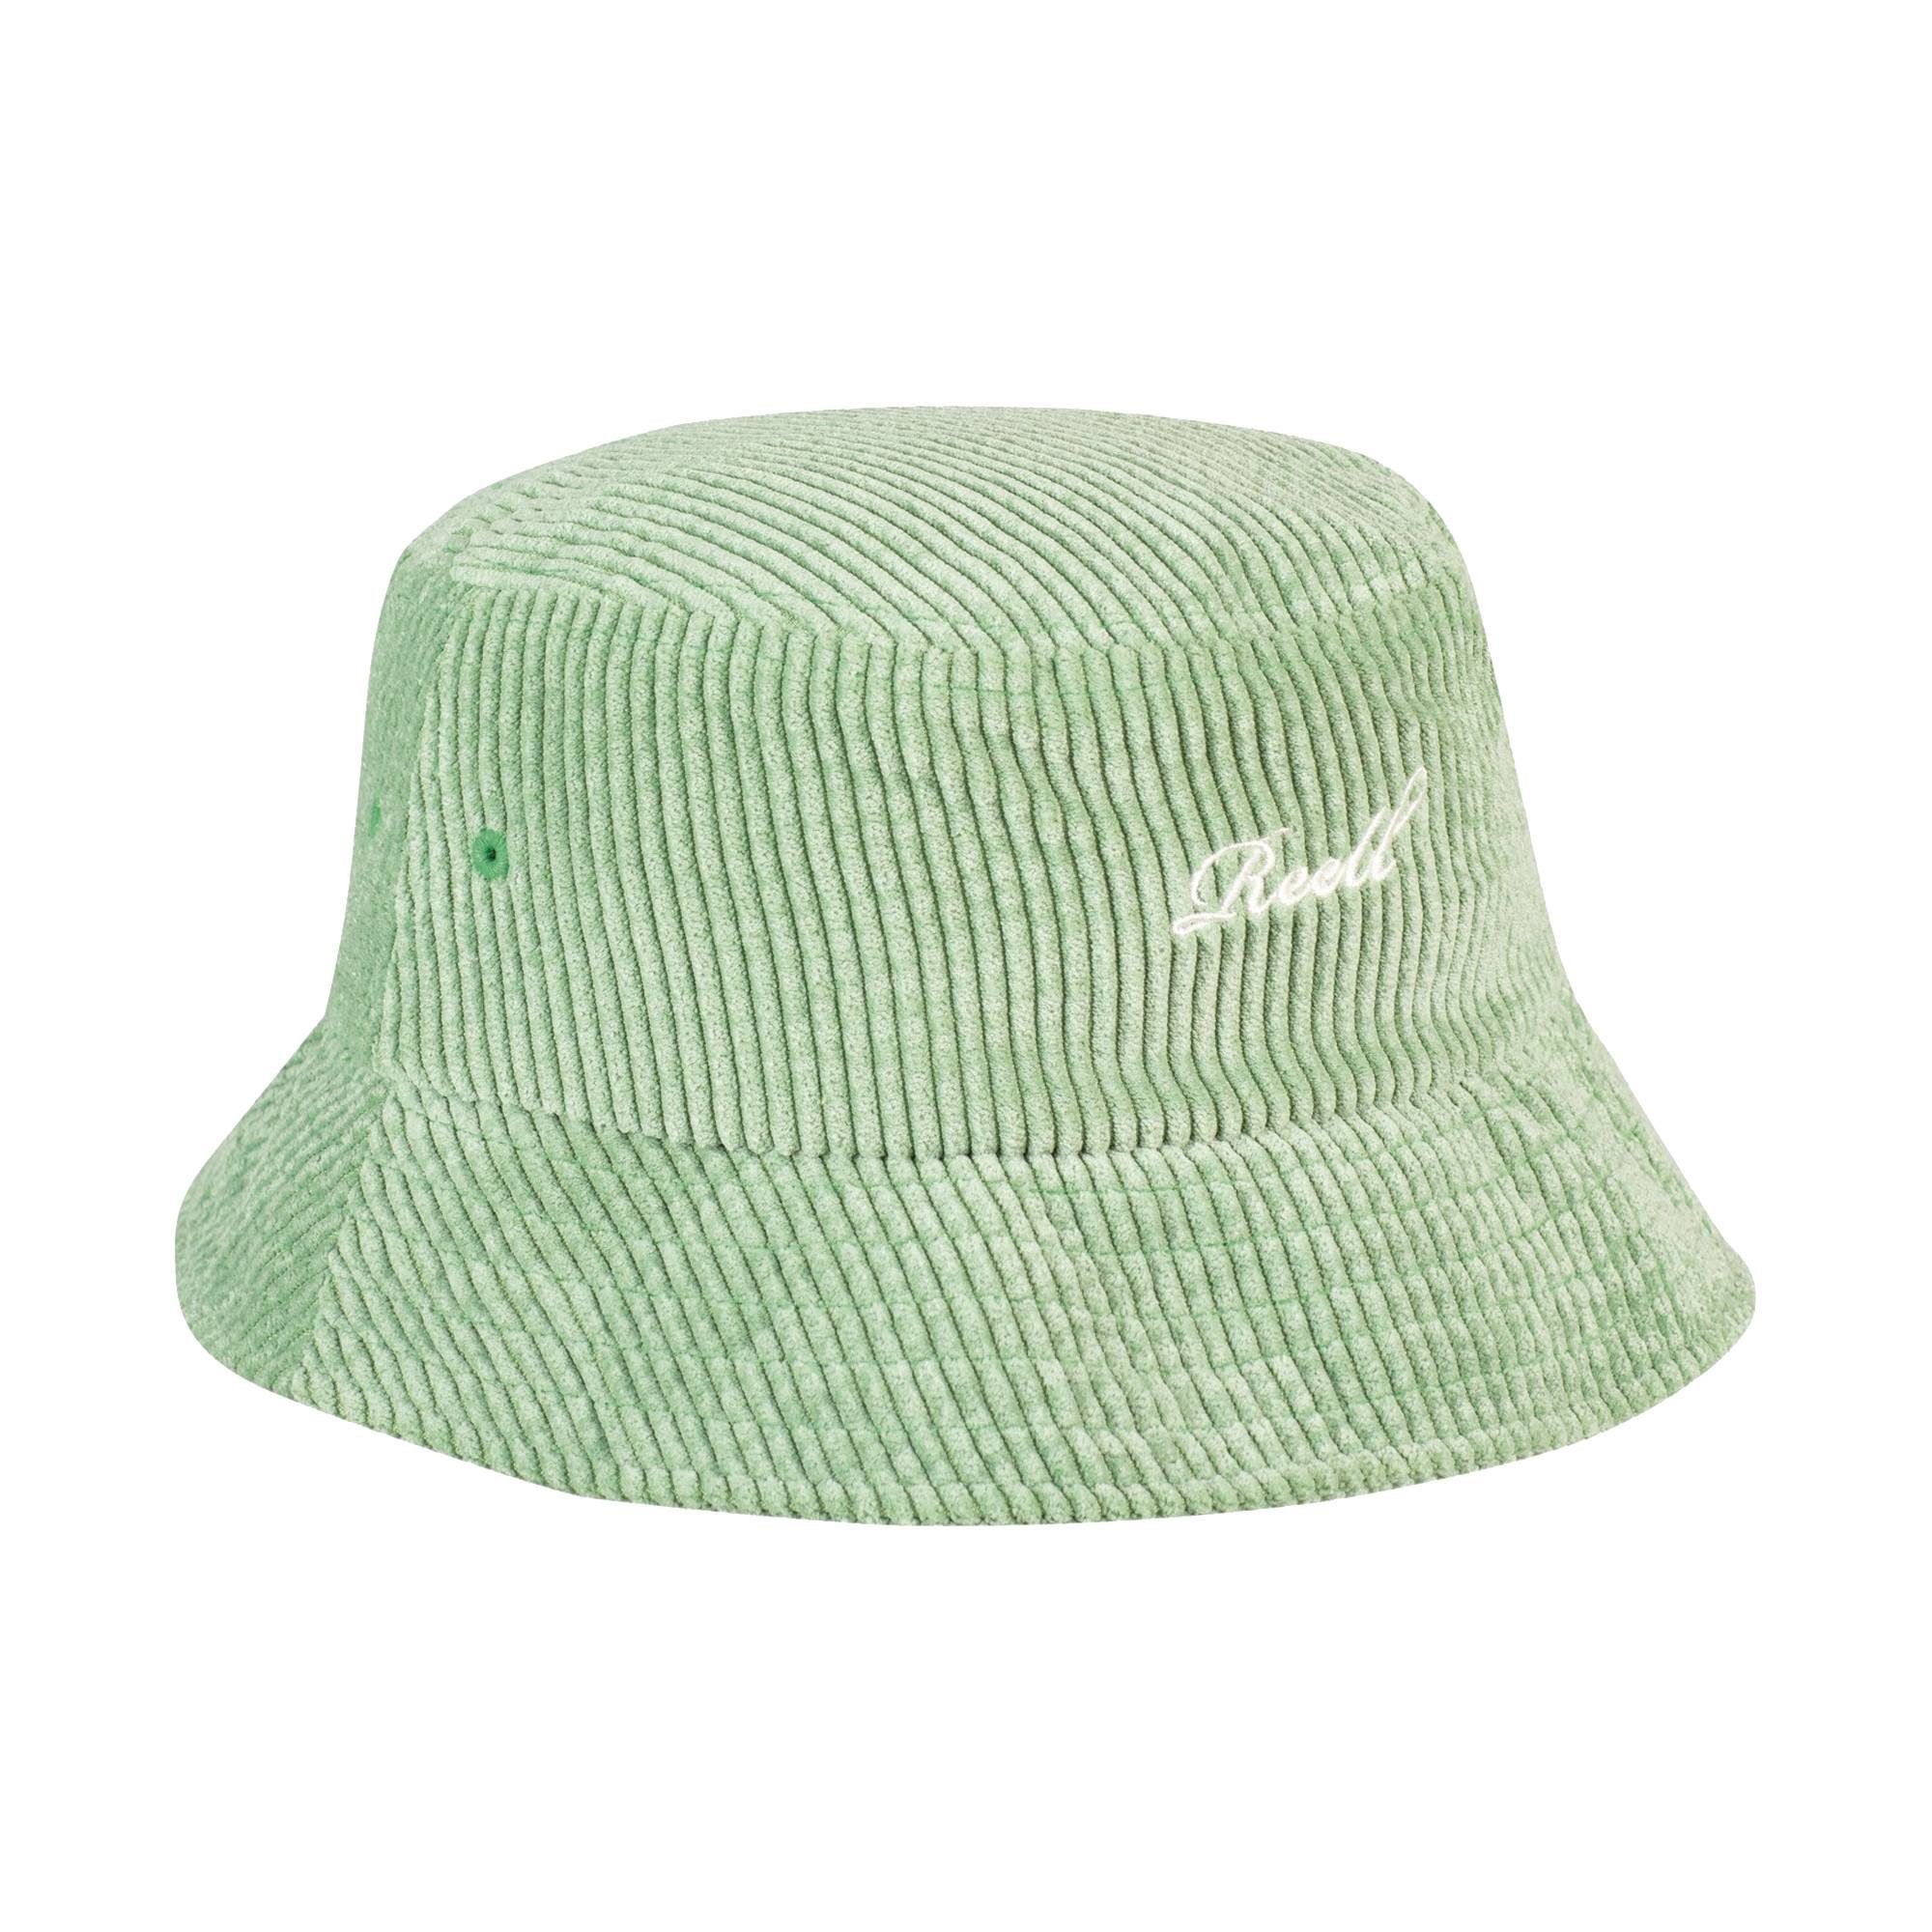 Hut green ice REELL Fischerhut Bucket Reell Hat